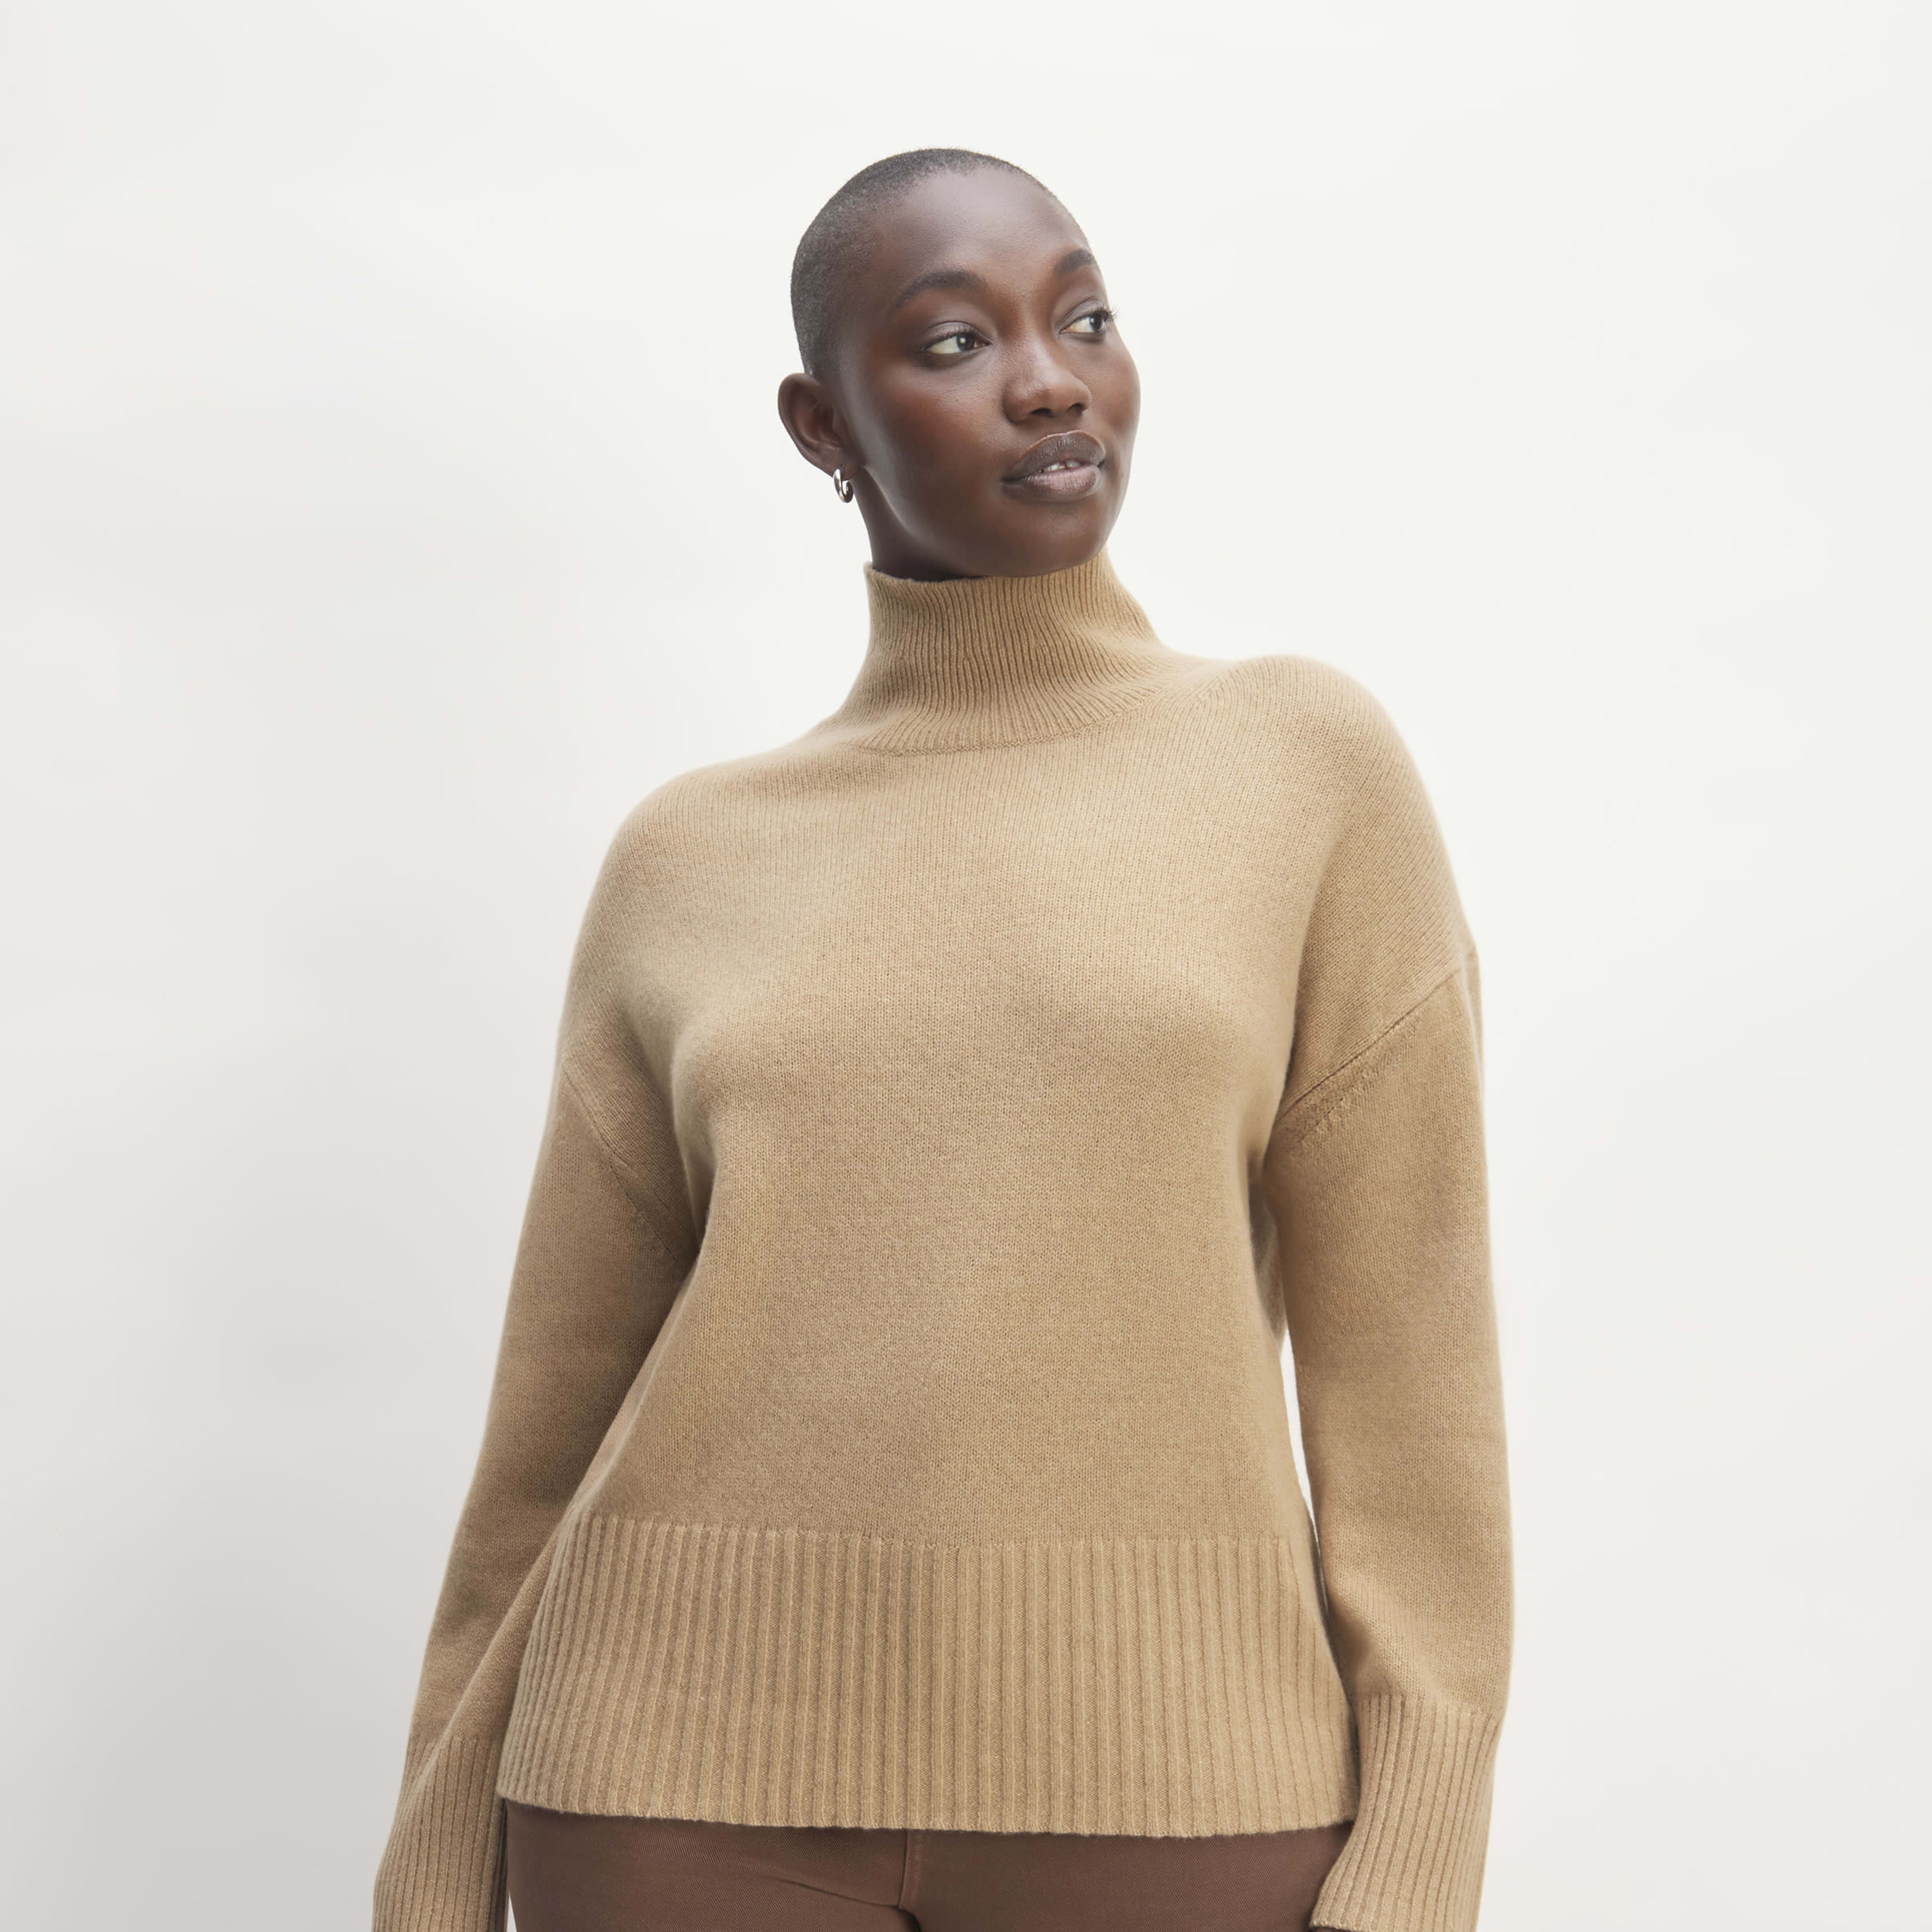 women's cashmere oversized turtleneck sweater by everlane in light camel, size xxs